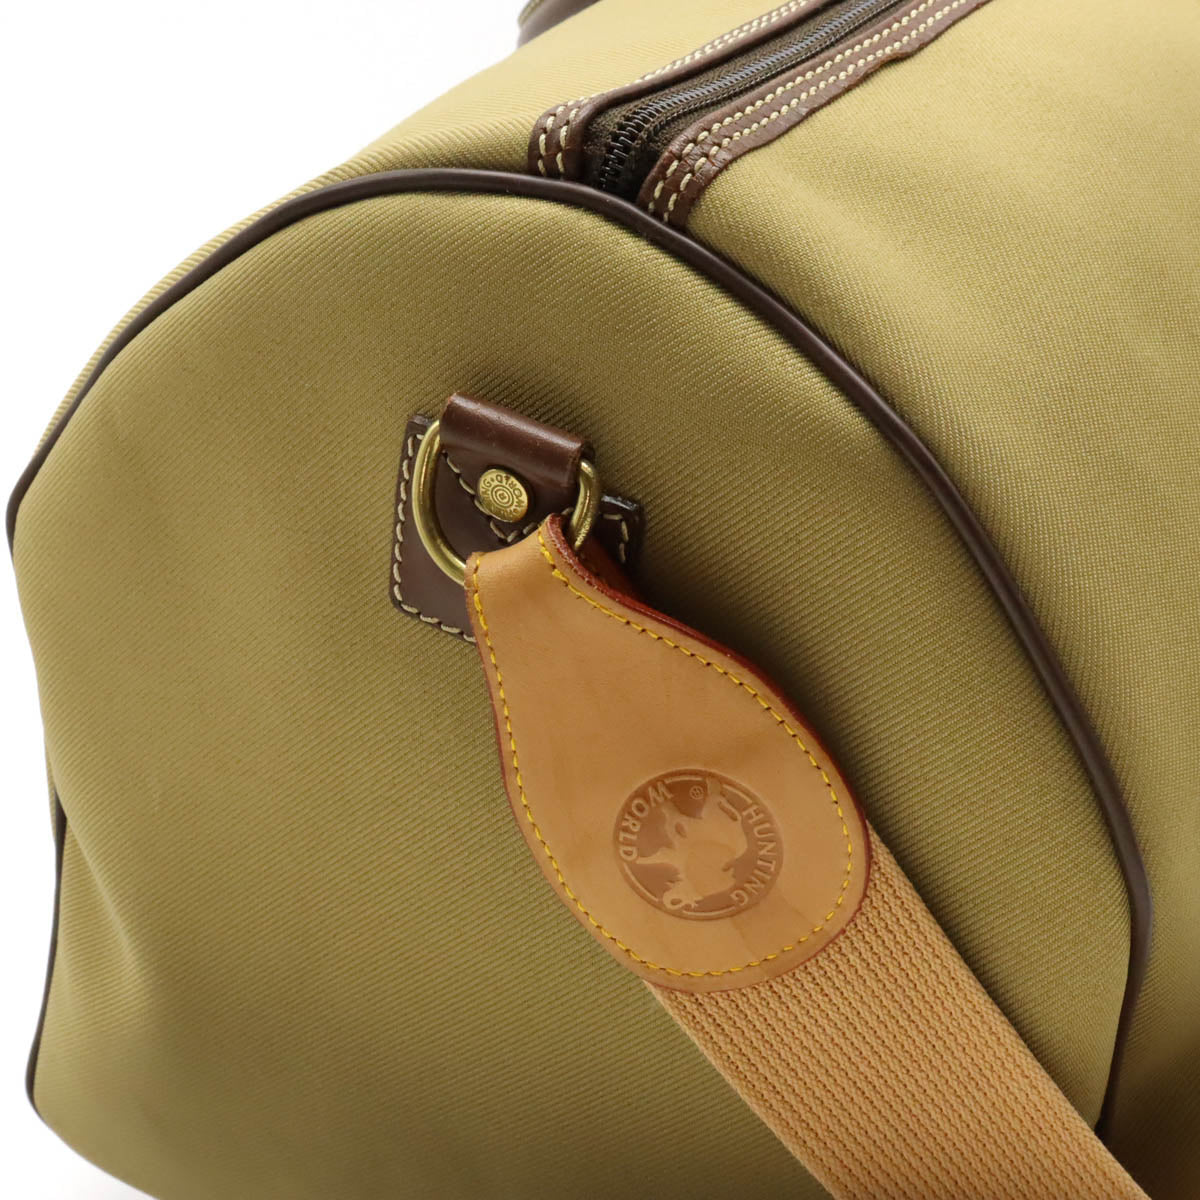 HUNTING WORLD Hunting World Sapphire Boston Bag Travel Bag 2WAY Shoulder Bag Canvas Leather Karki Brown